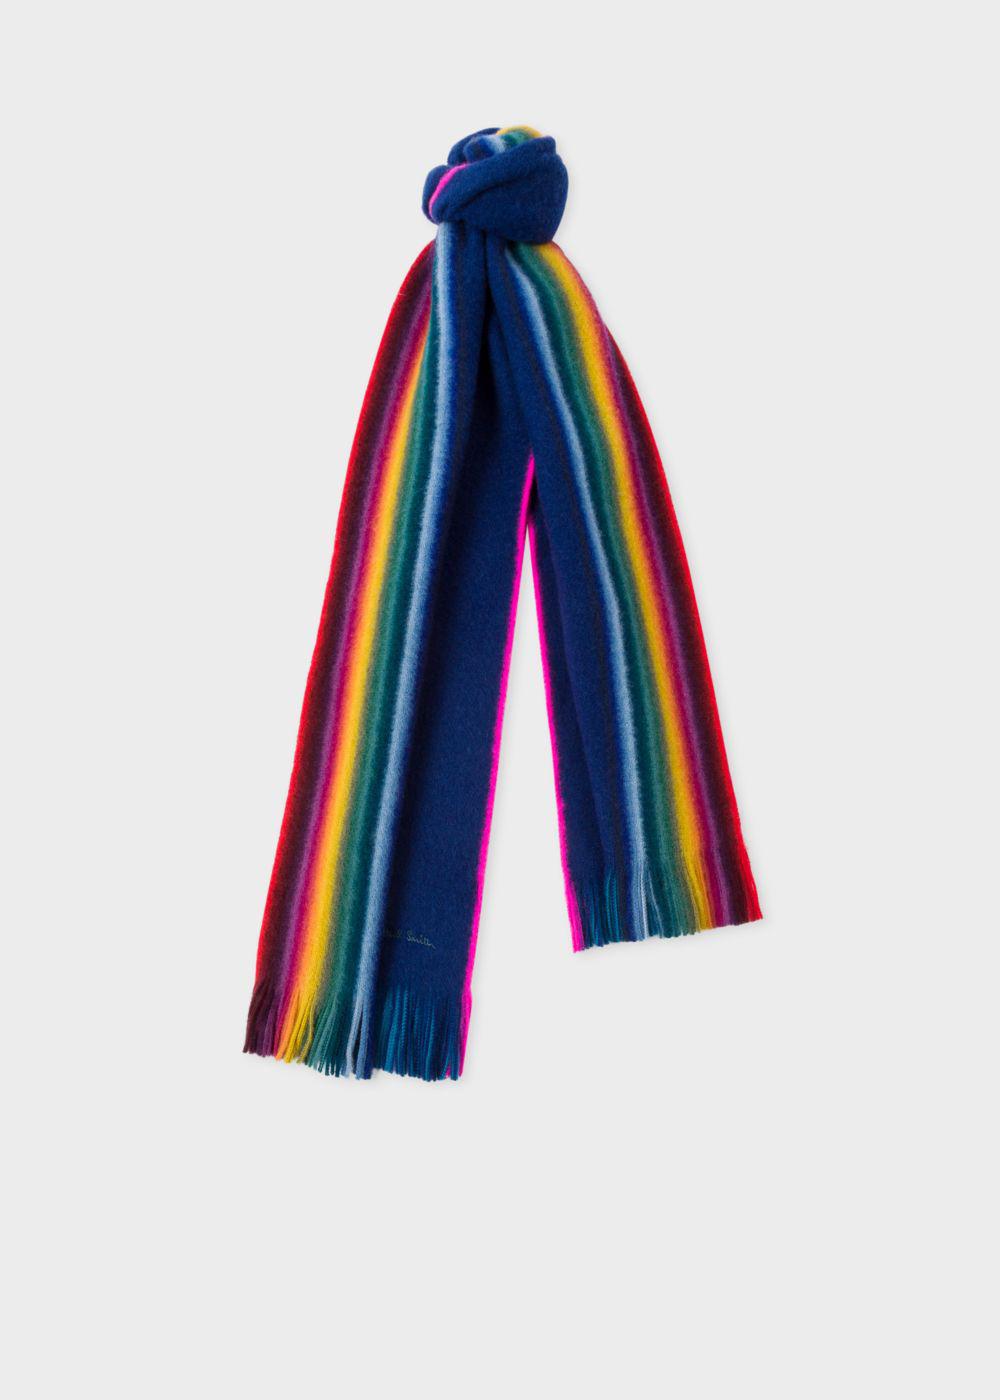 Paul Smith Men's Navy Rainbow-edge Merino Wool Scarf in Blue for Men - Lyst